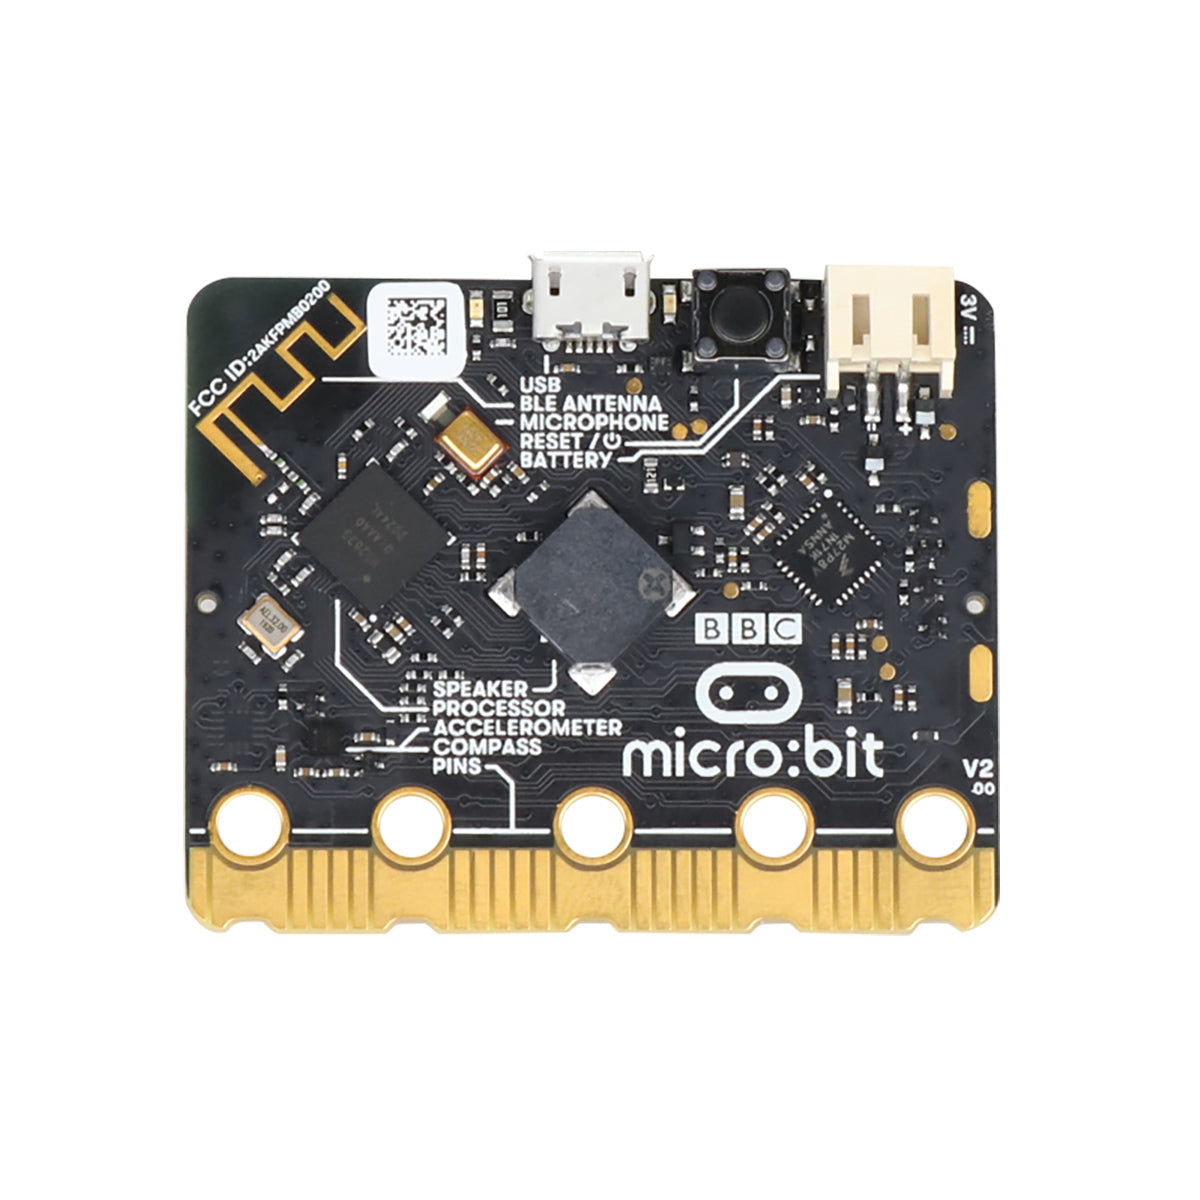 Hiwonder BBC microbit V2.0 Built-In Speaker &Microphone for micro bit STEM Education